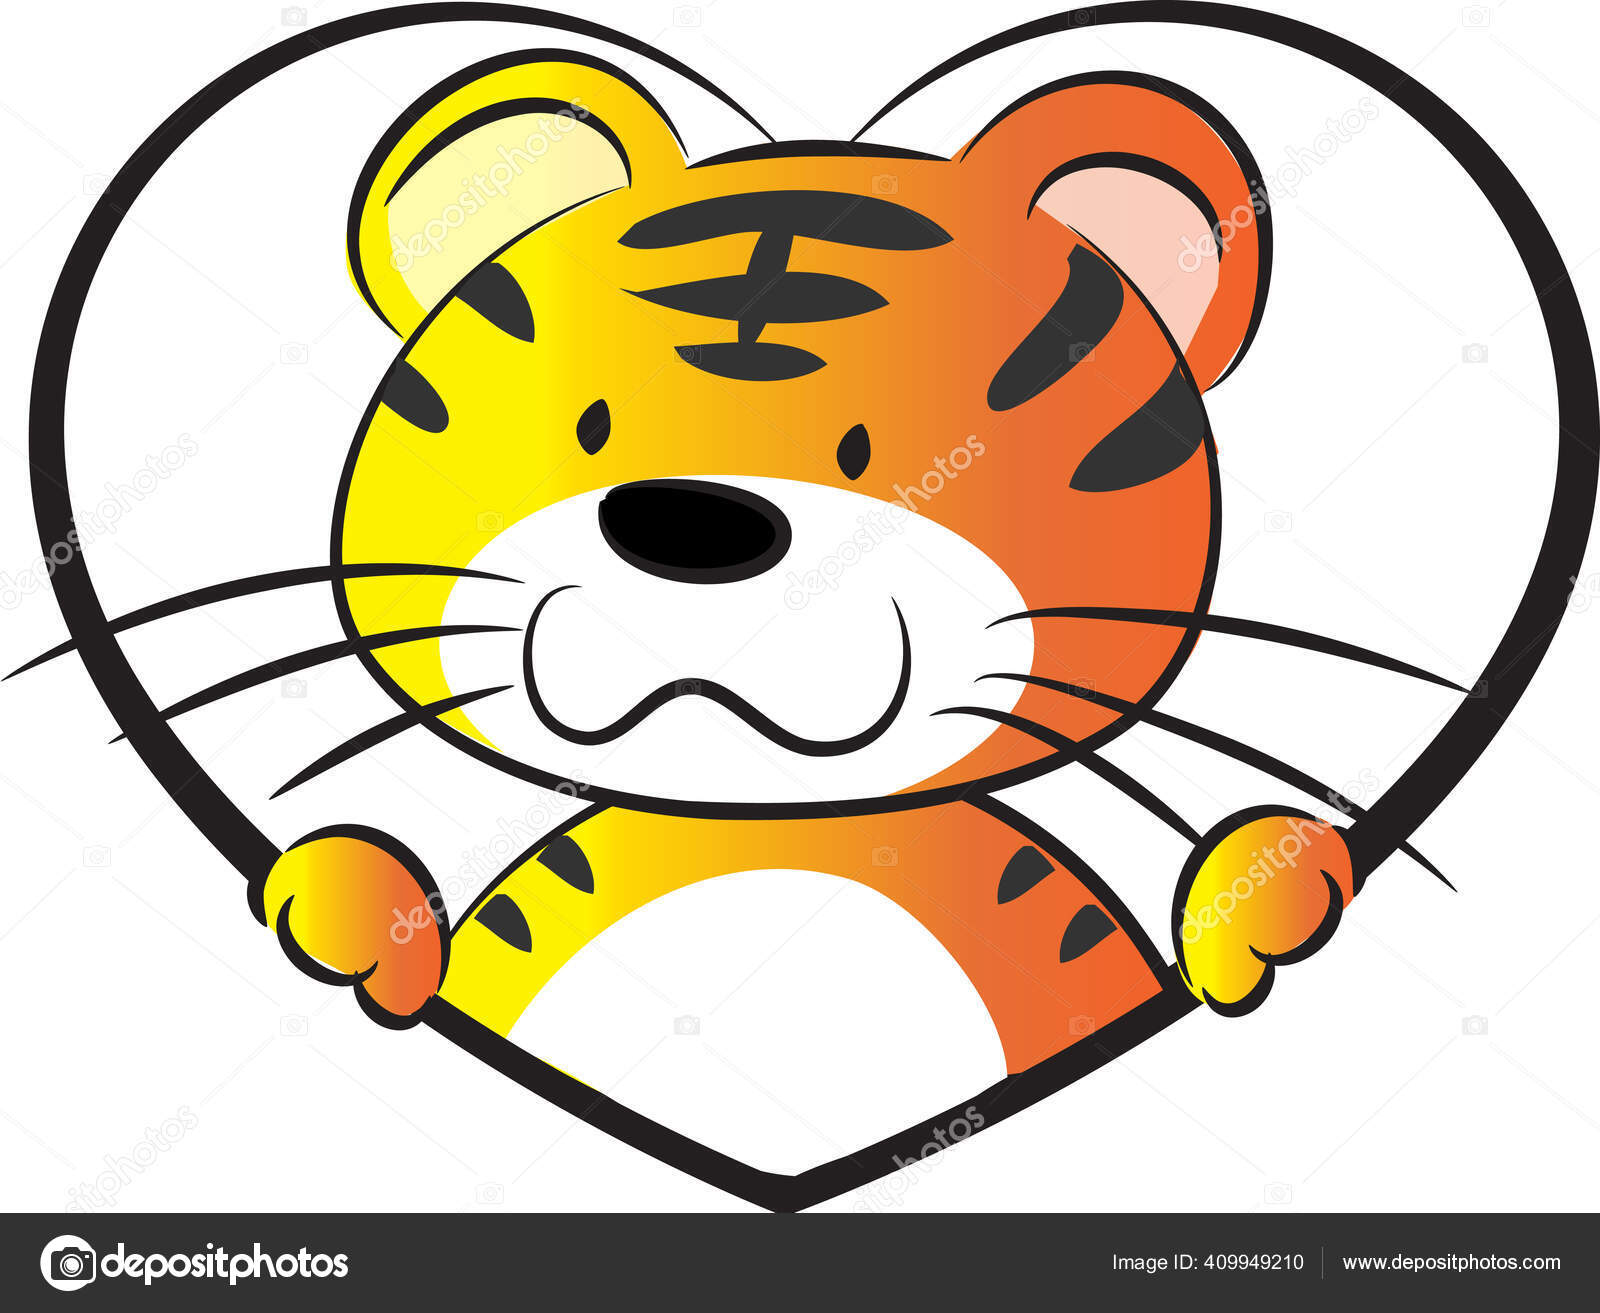 https://st4.depositphotos.com/4446567/40994/v/1600/depositphotos_409949210-stock-illustration-cartoon-cute-little-tiger-heart.jpg